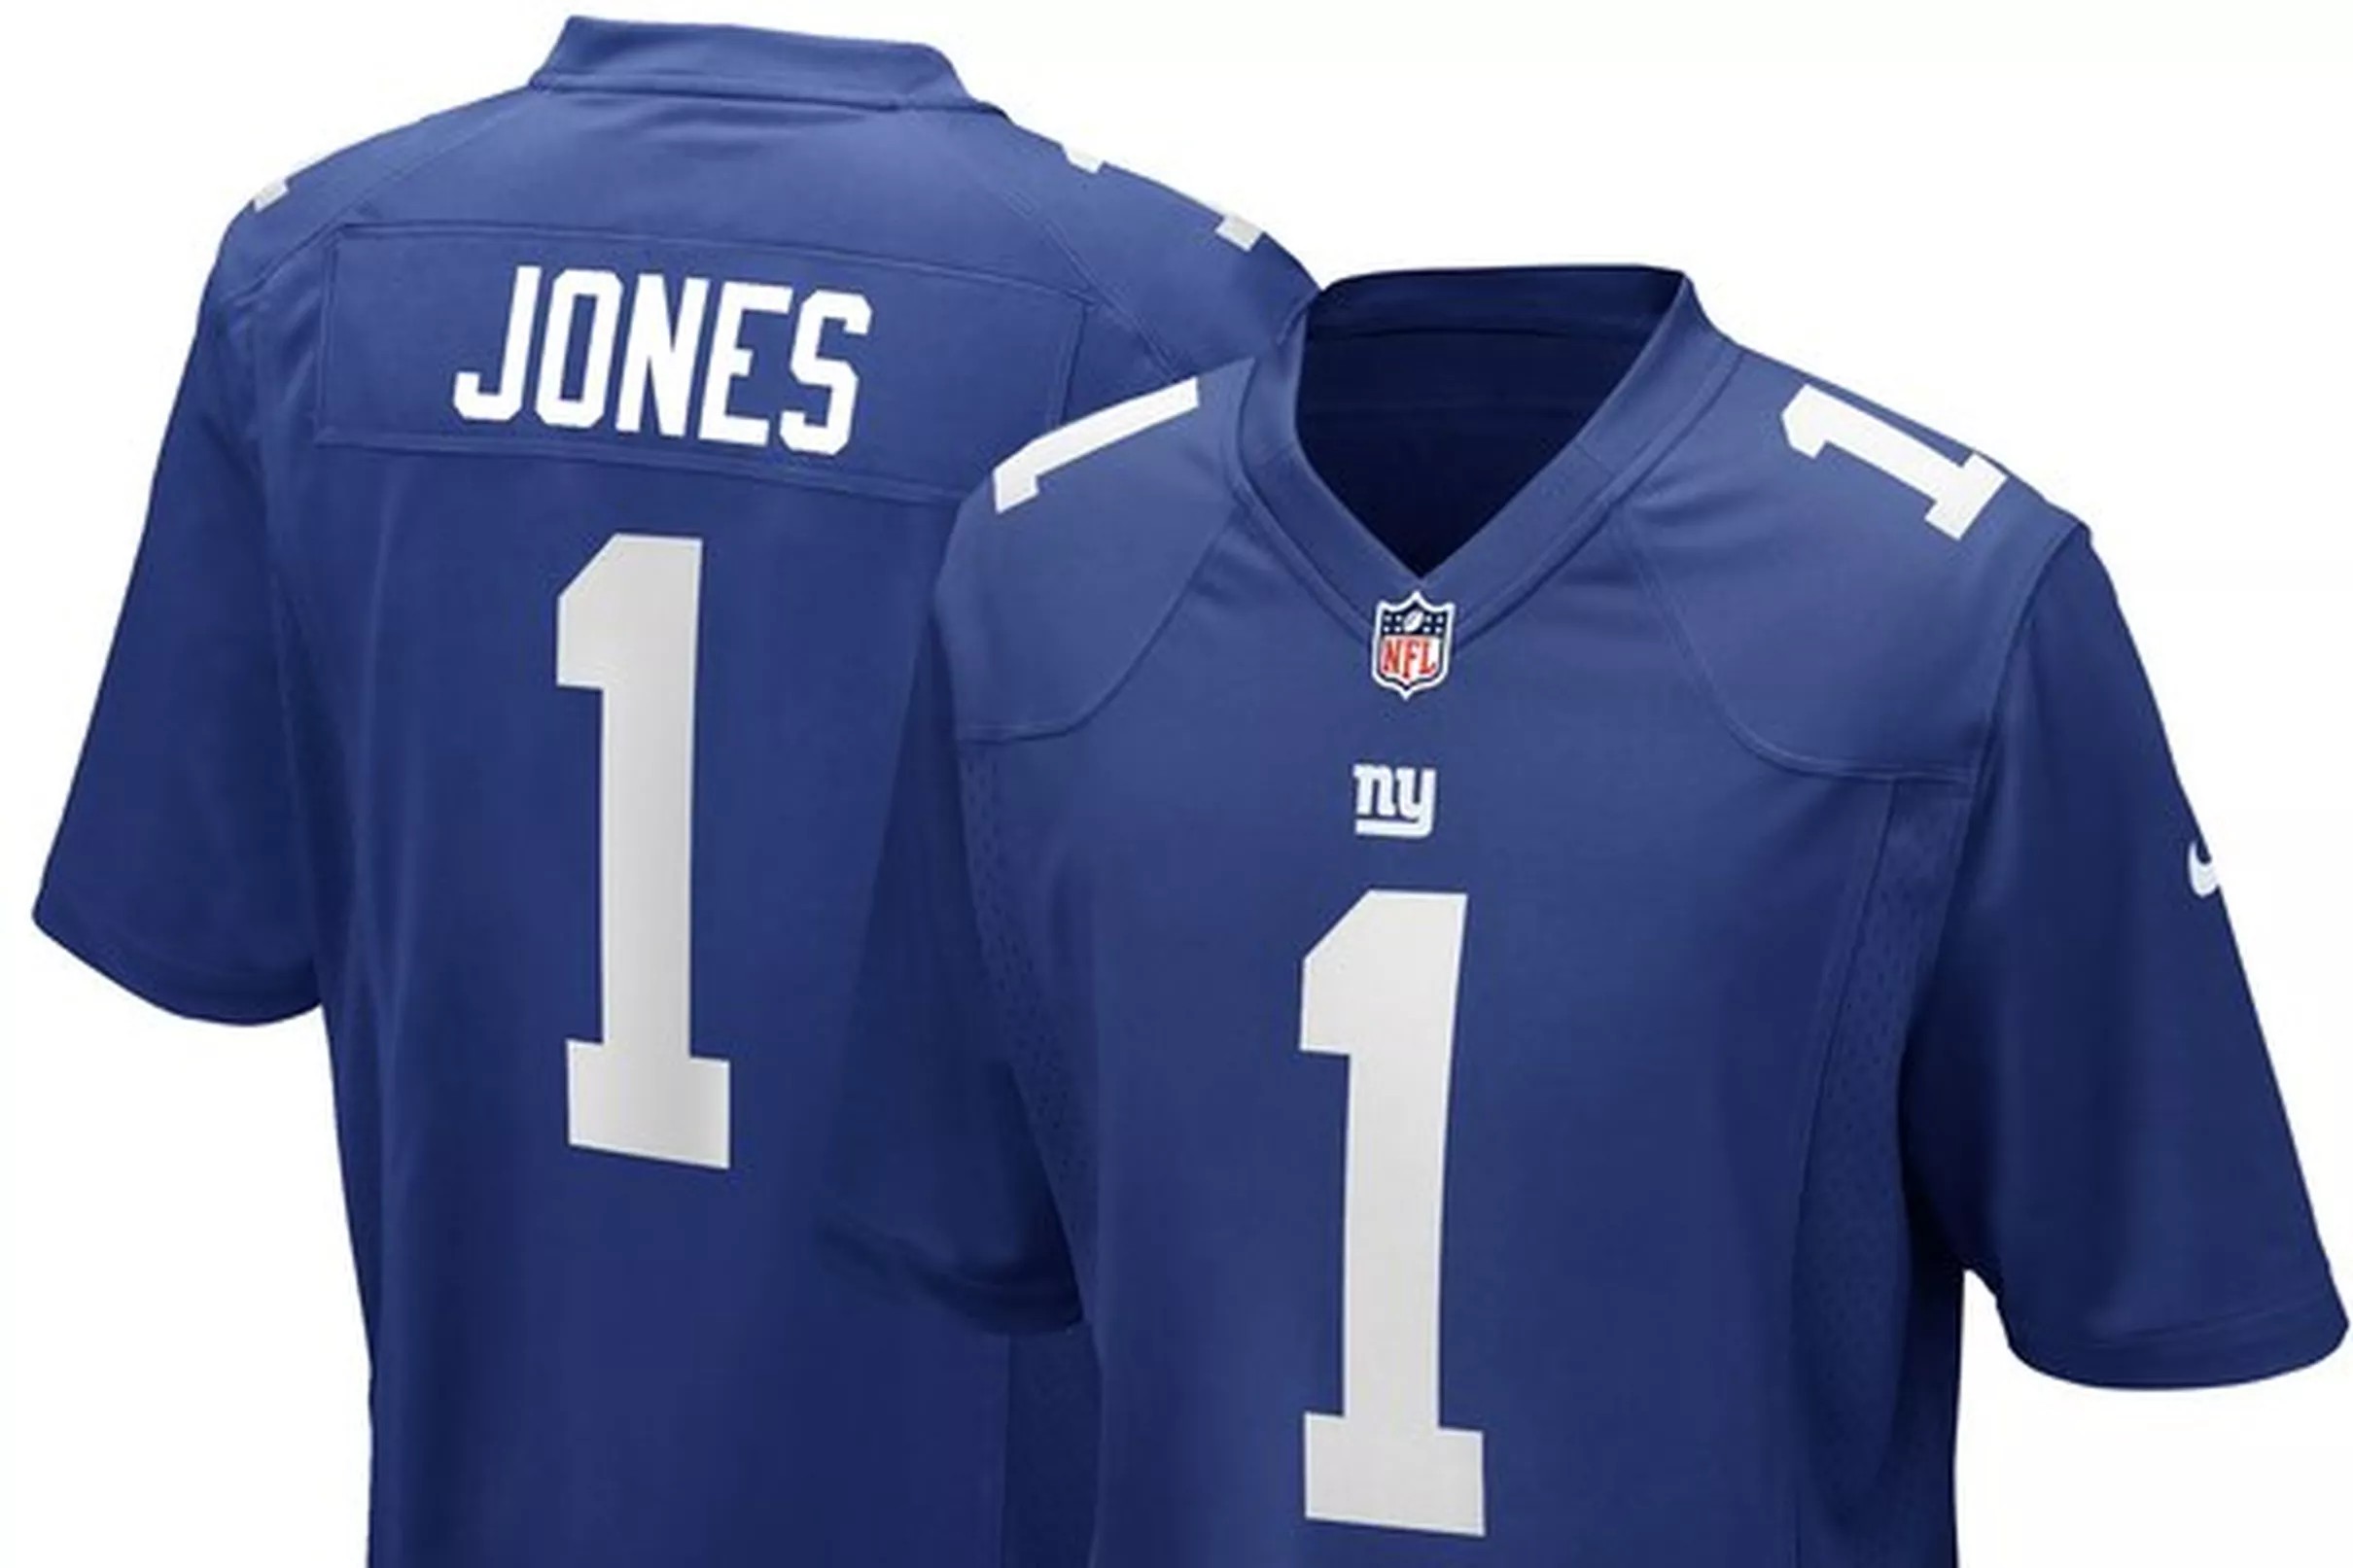 Get your New York Giants NFL Draft rookie jerseys